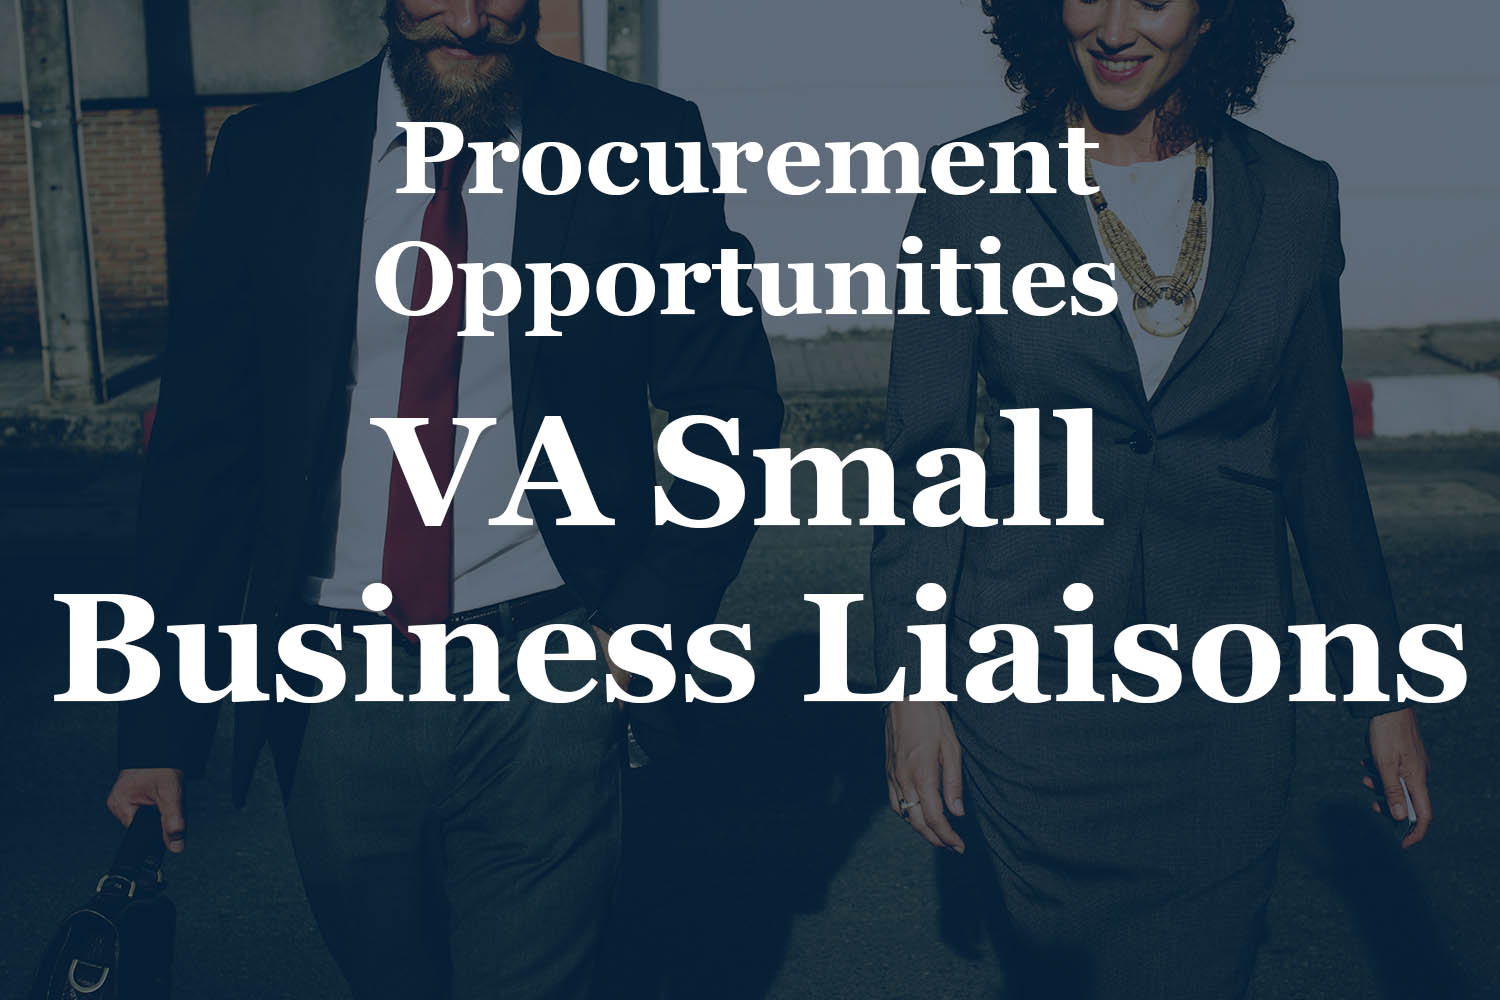 Business Laisons. Advice on potential procurement opportunities